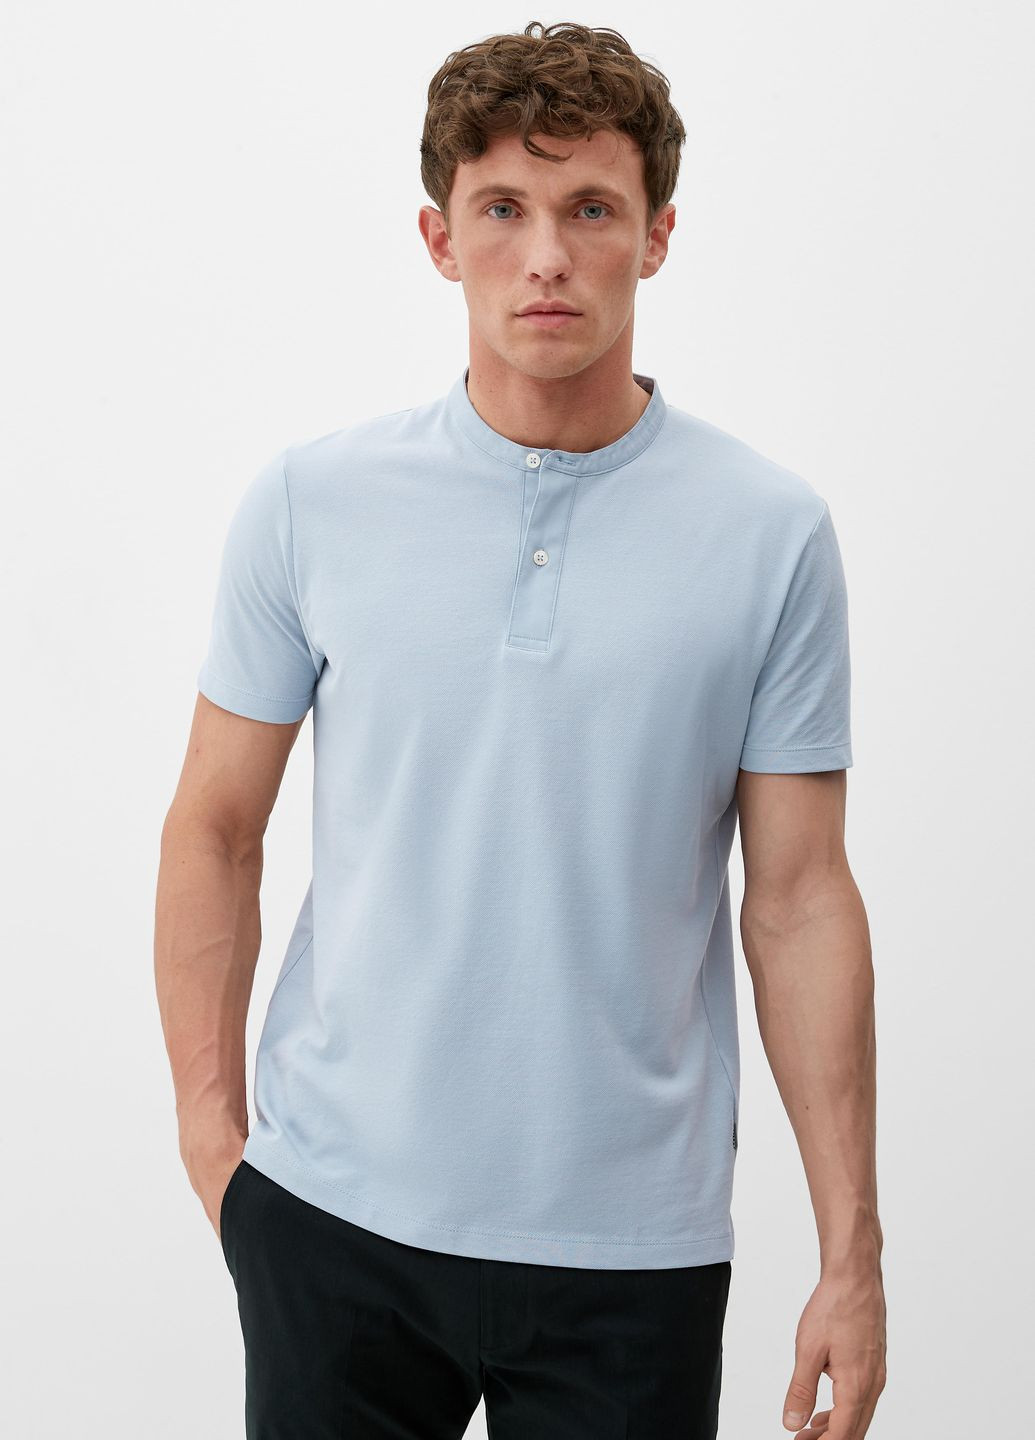 Голубой футболка-поло для мужчин S.Oliver